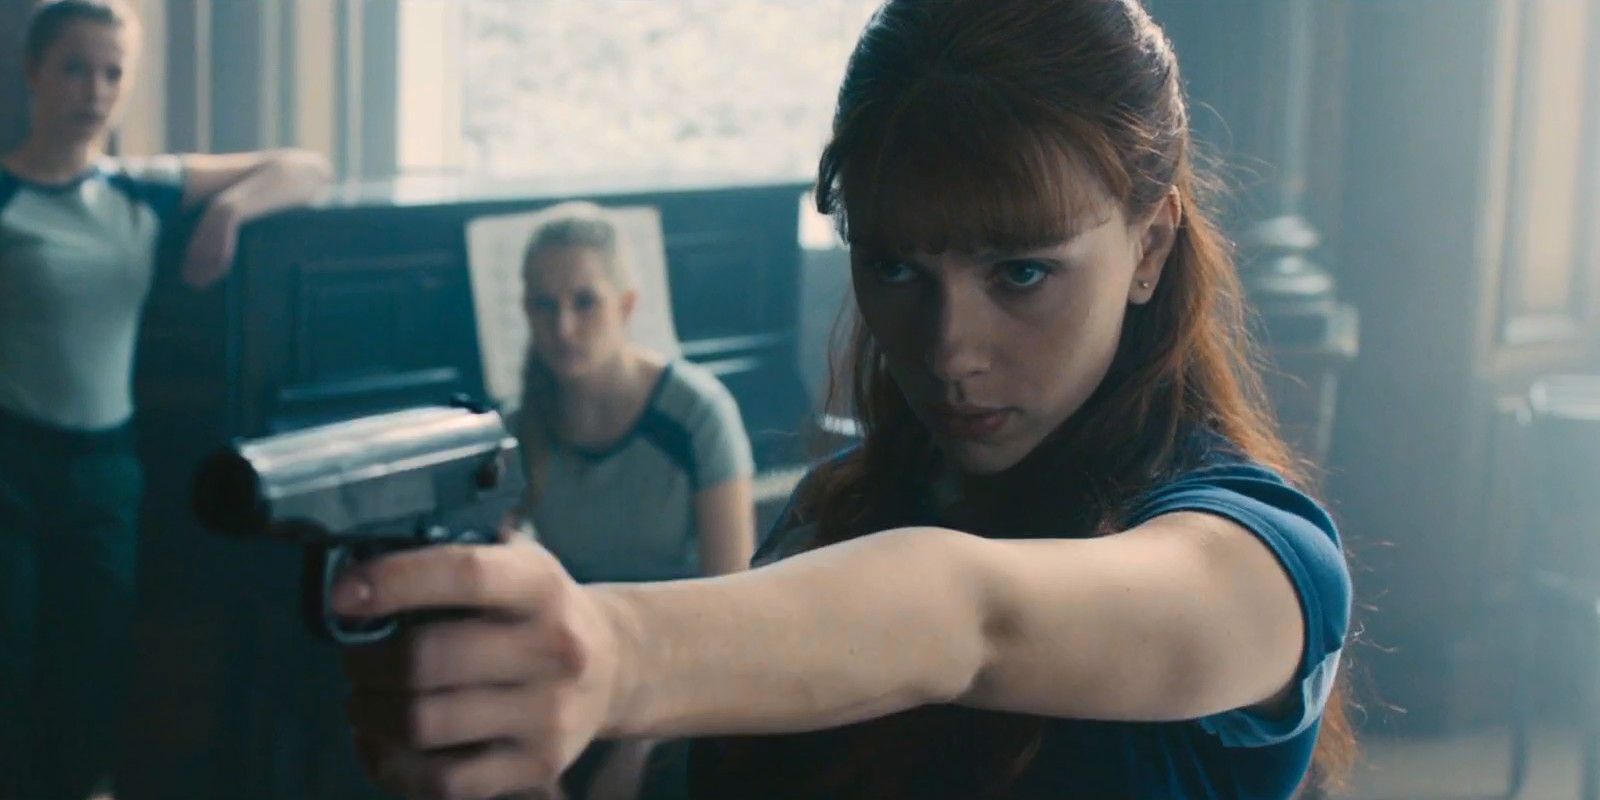 When Will The Black Widow Movie Trailer Release?